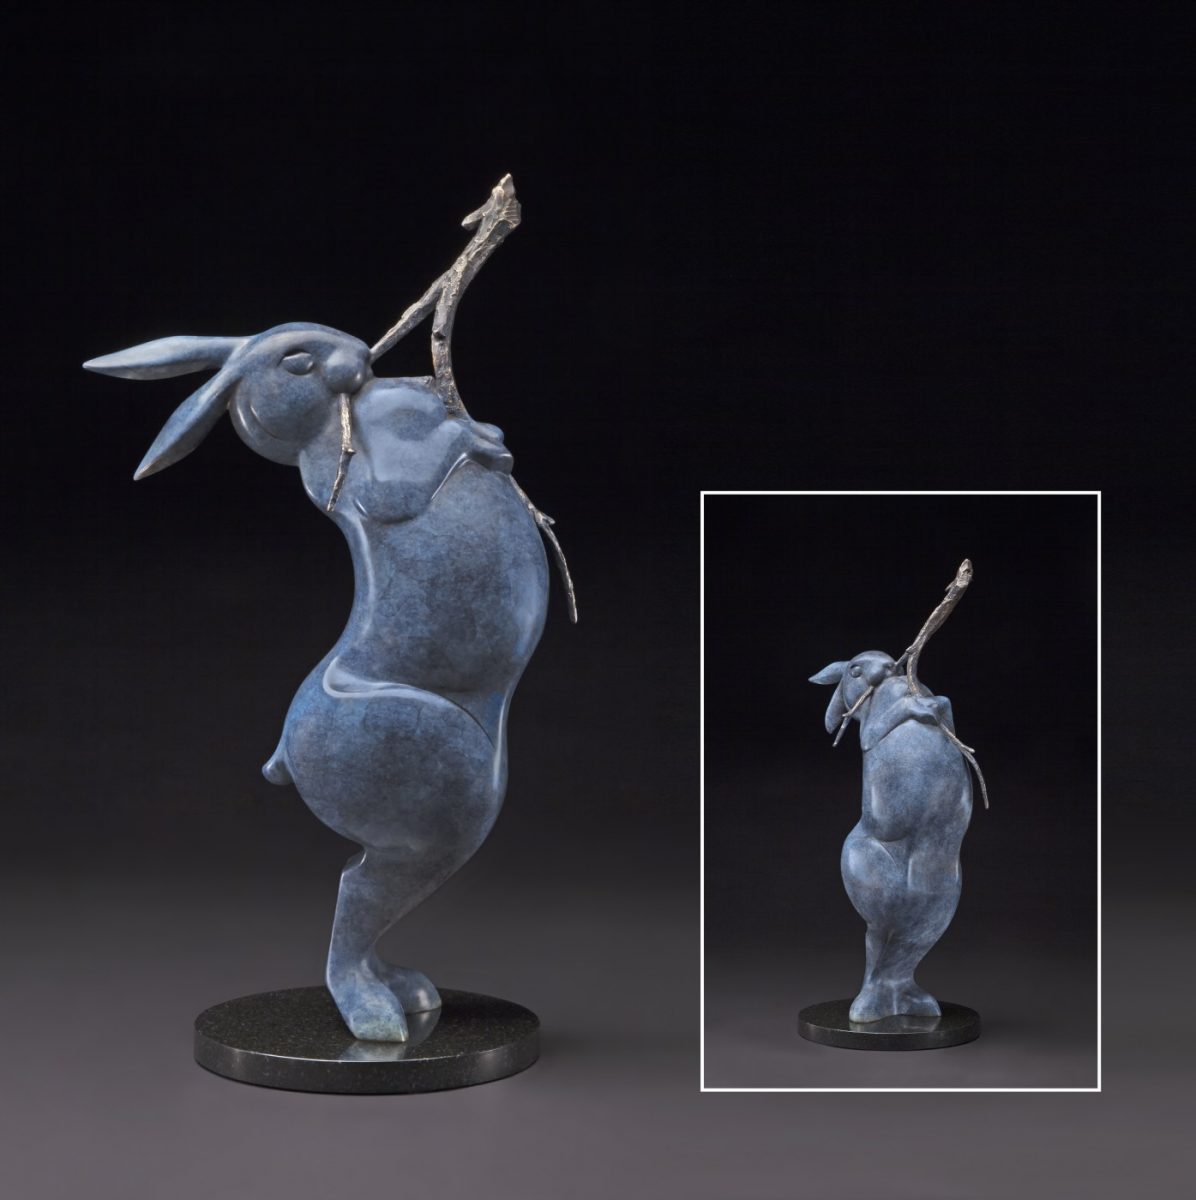 Willow Snipper rabbit sculpture by Tim Cherry